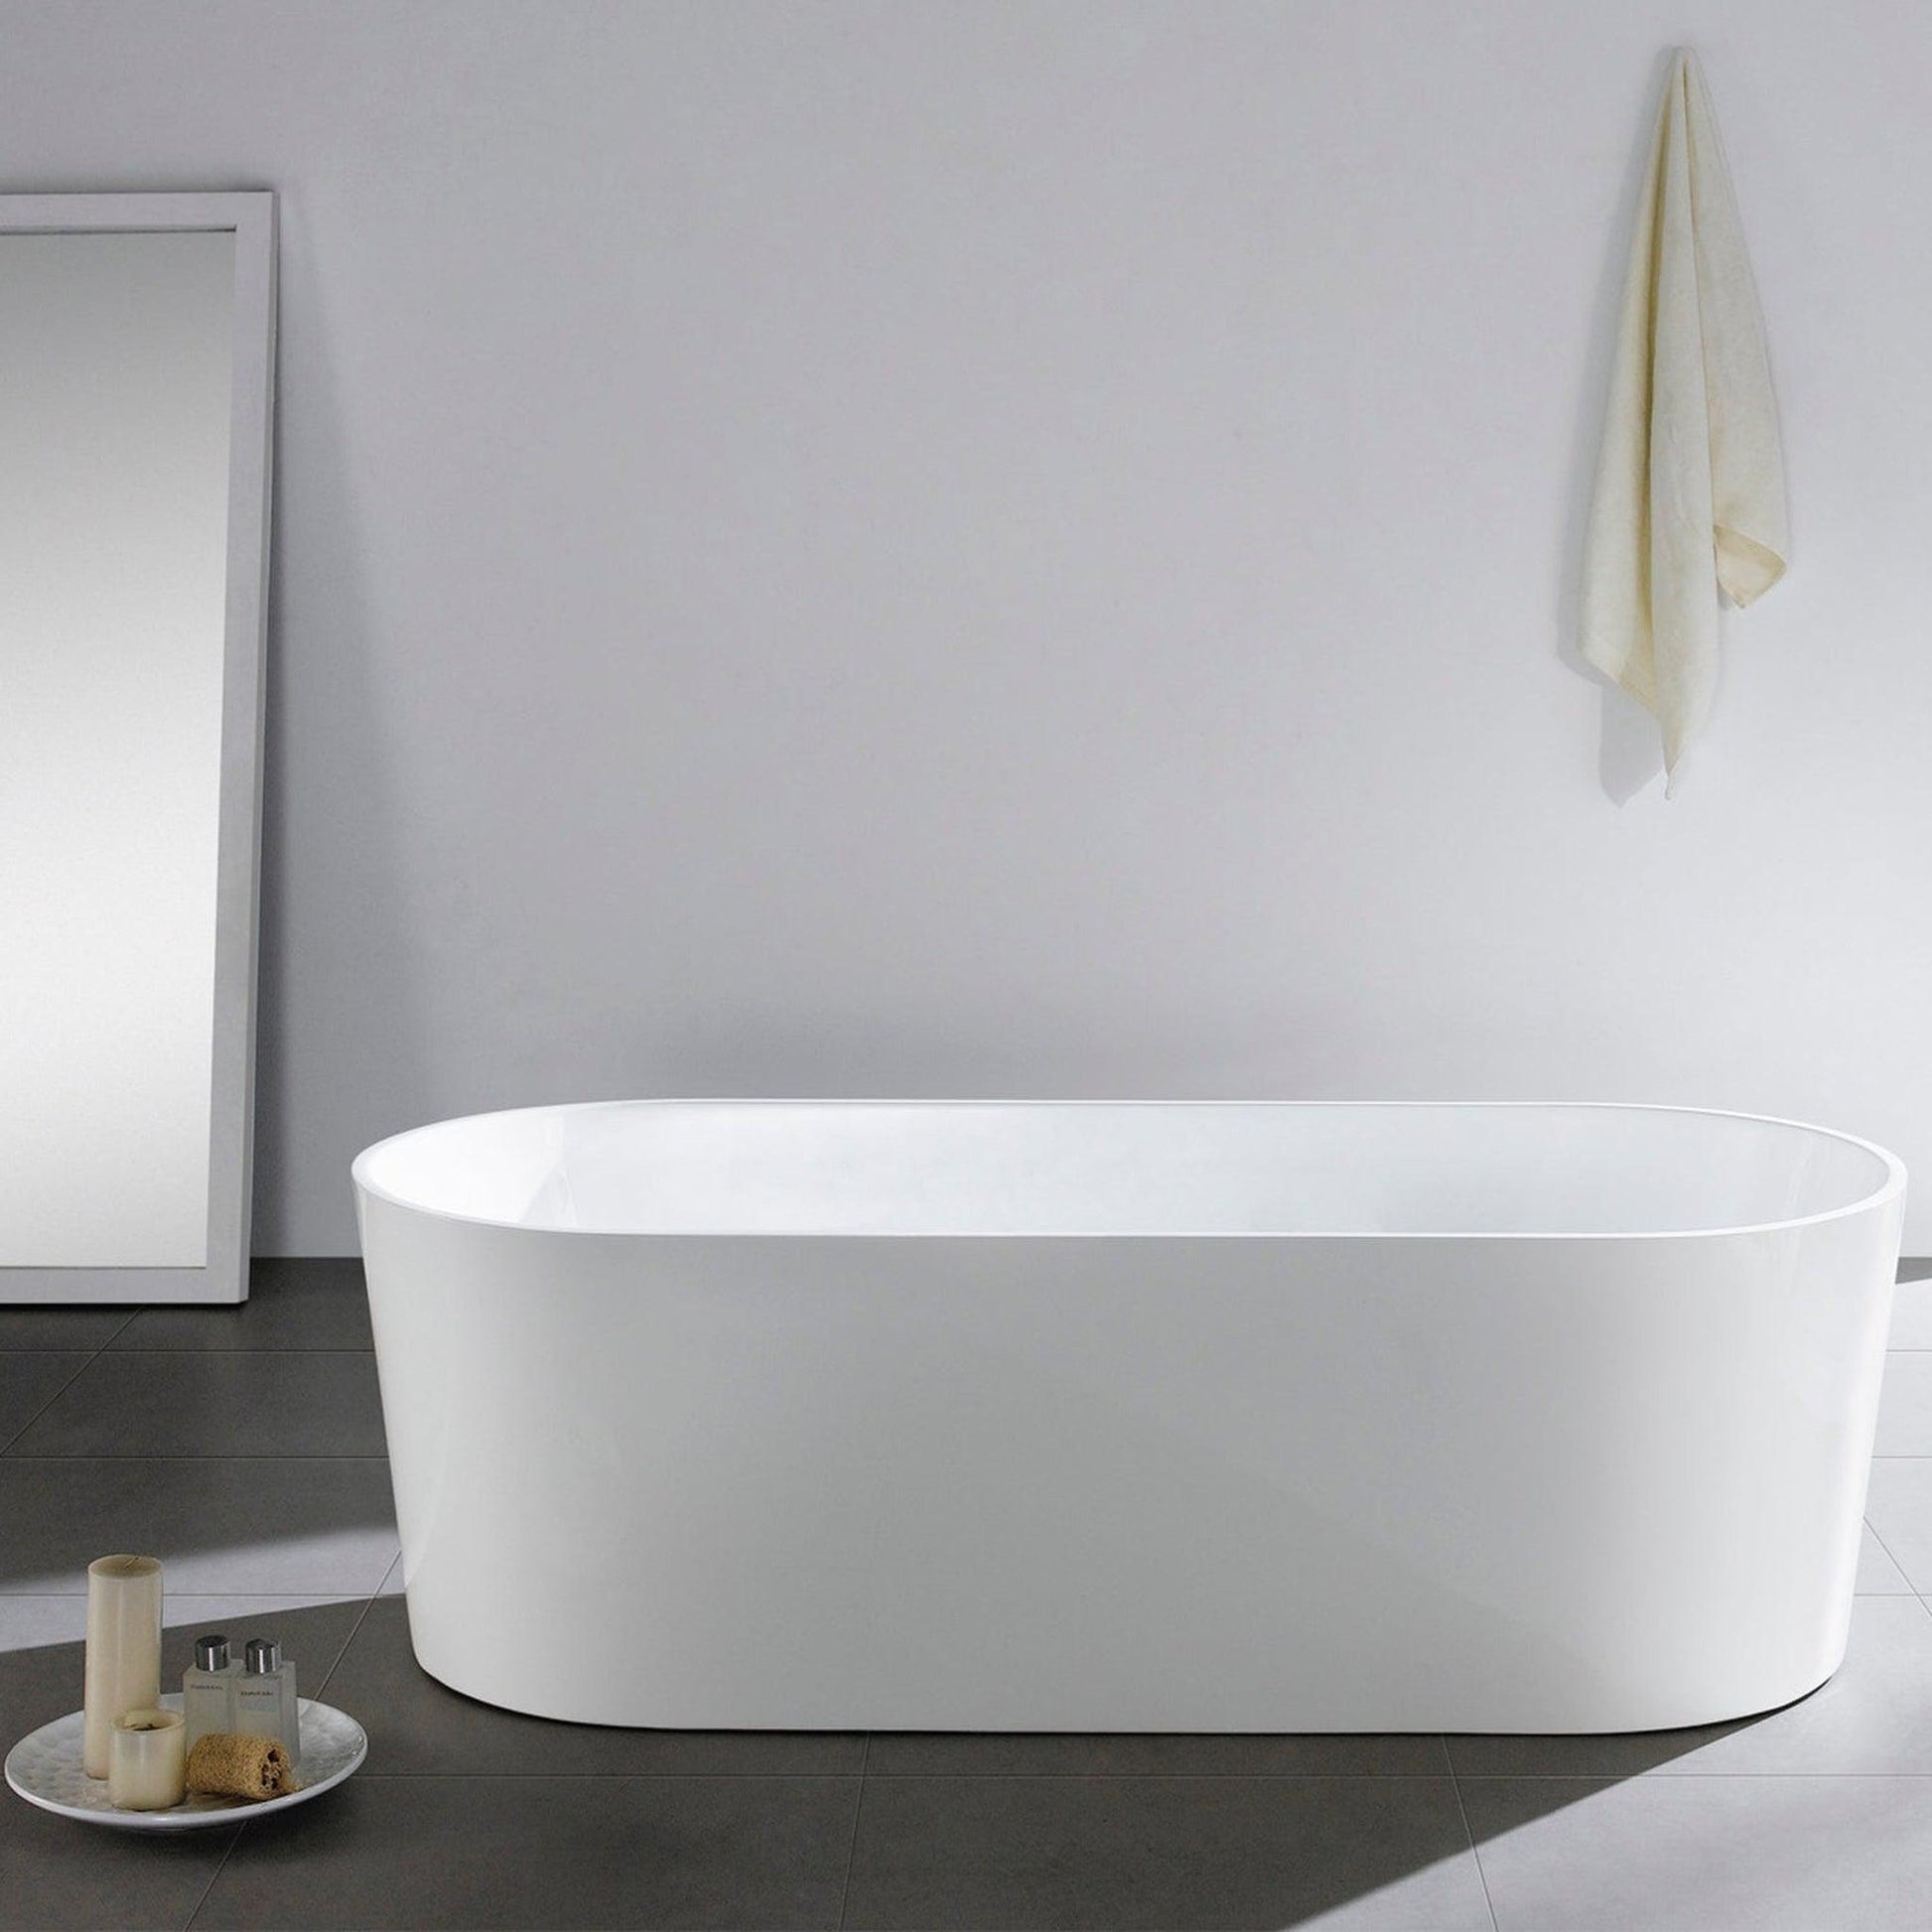 Eviva Chloe 55" x 30" White Freestanding Rectangular Acrylic Soaking Bathtub